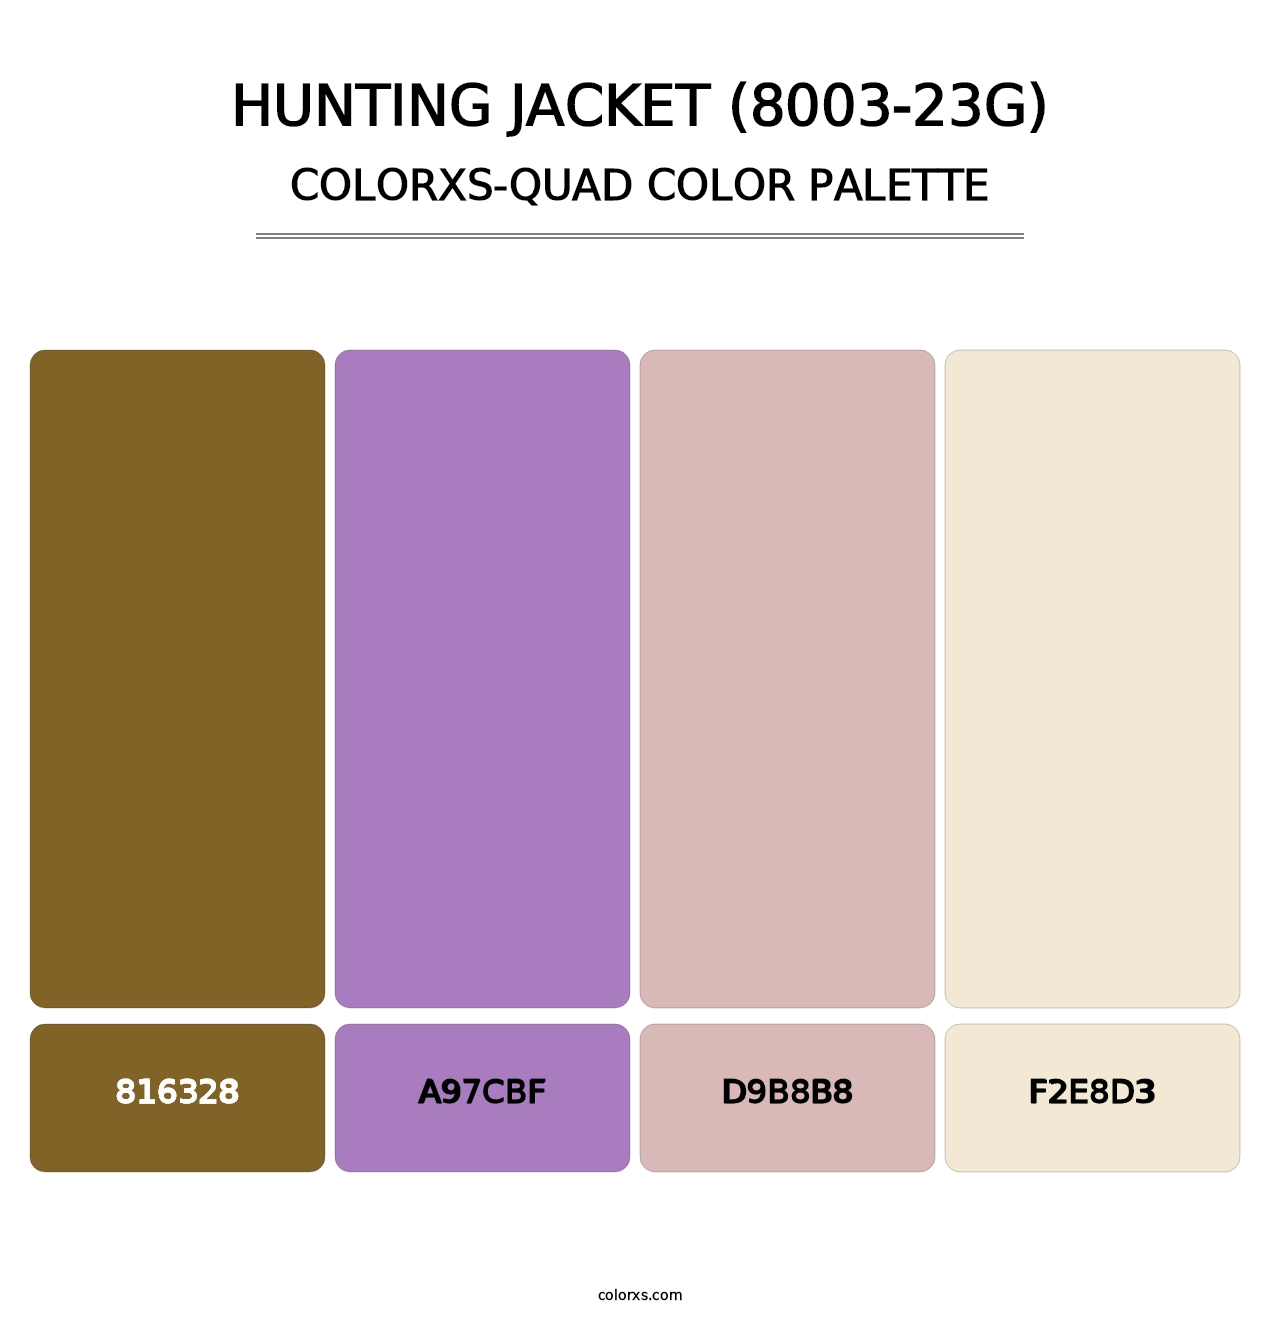 Hunting Jacket (8003-23G) - Colorxs Quad Palette